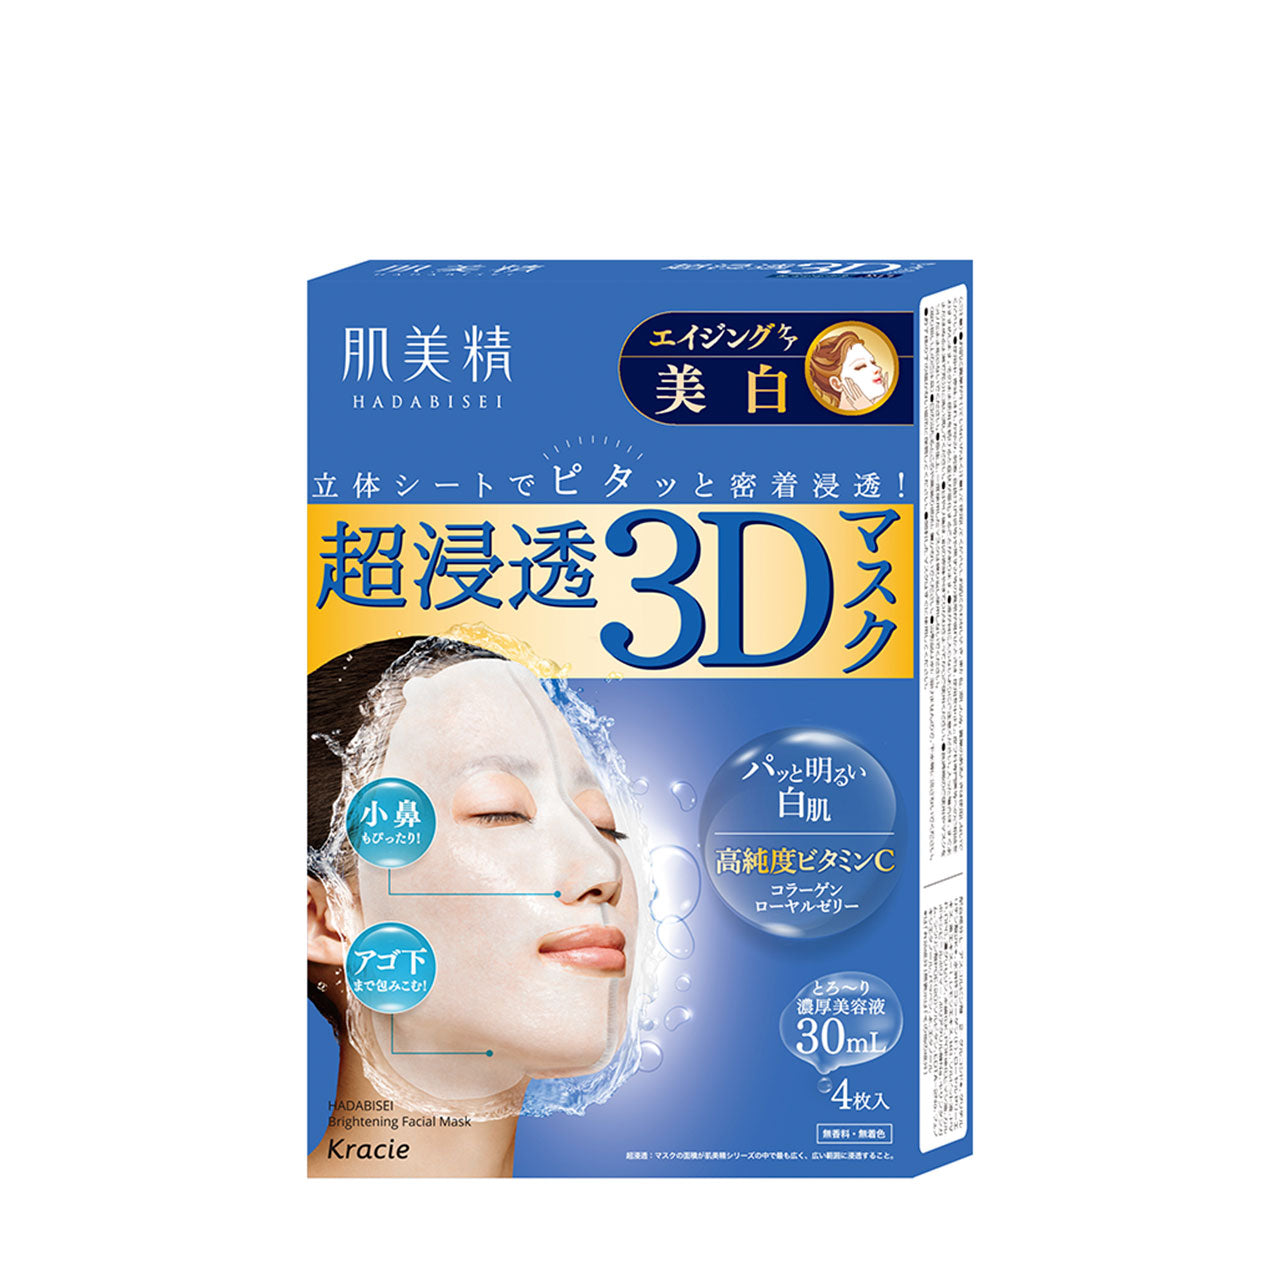 Kracie Hadabisei 3D Face Mask Aging-Care Brightening 4PCS | Sasa Global eShop